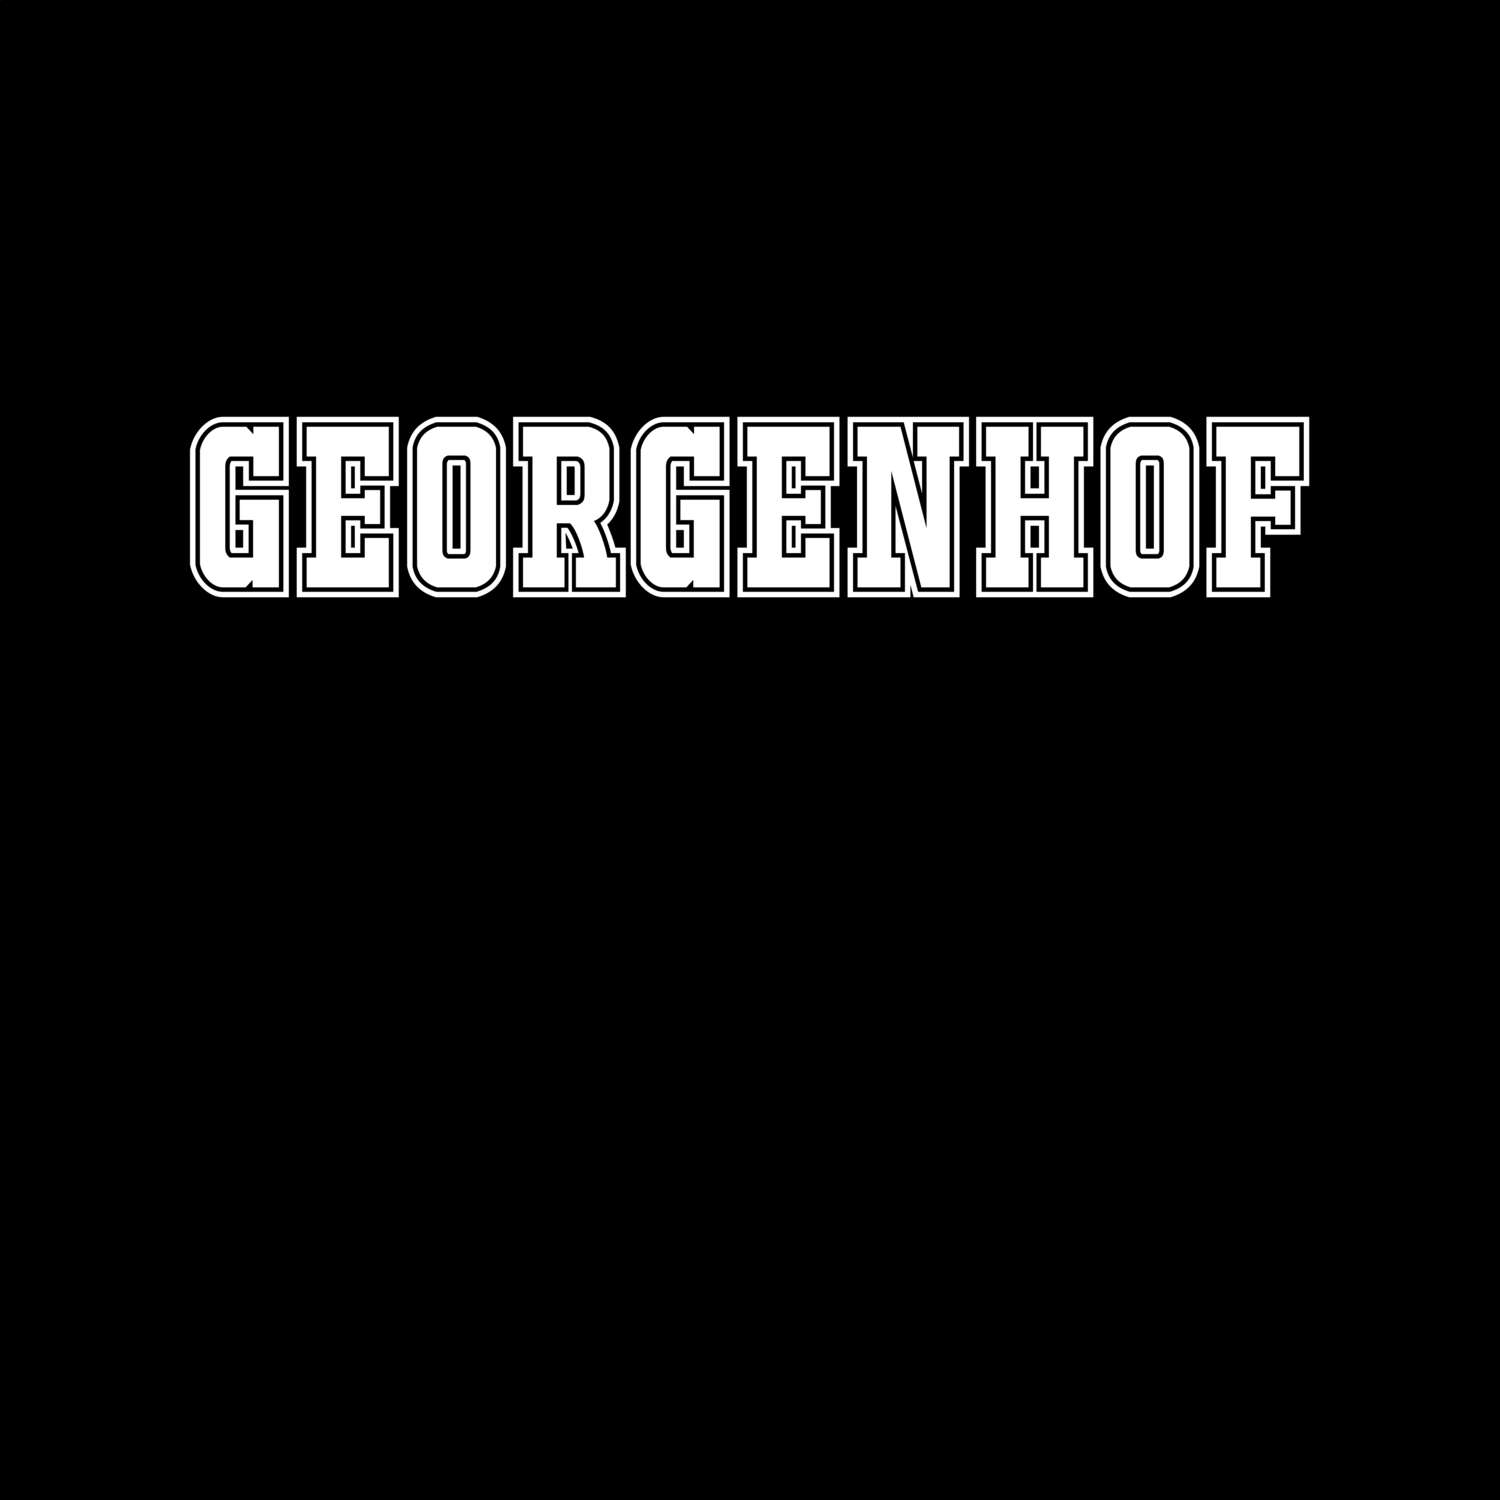 Georgenhof T-Shirt »Classic«